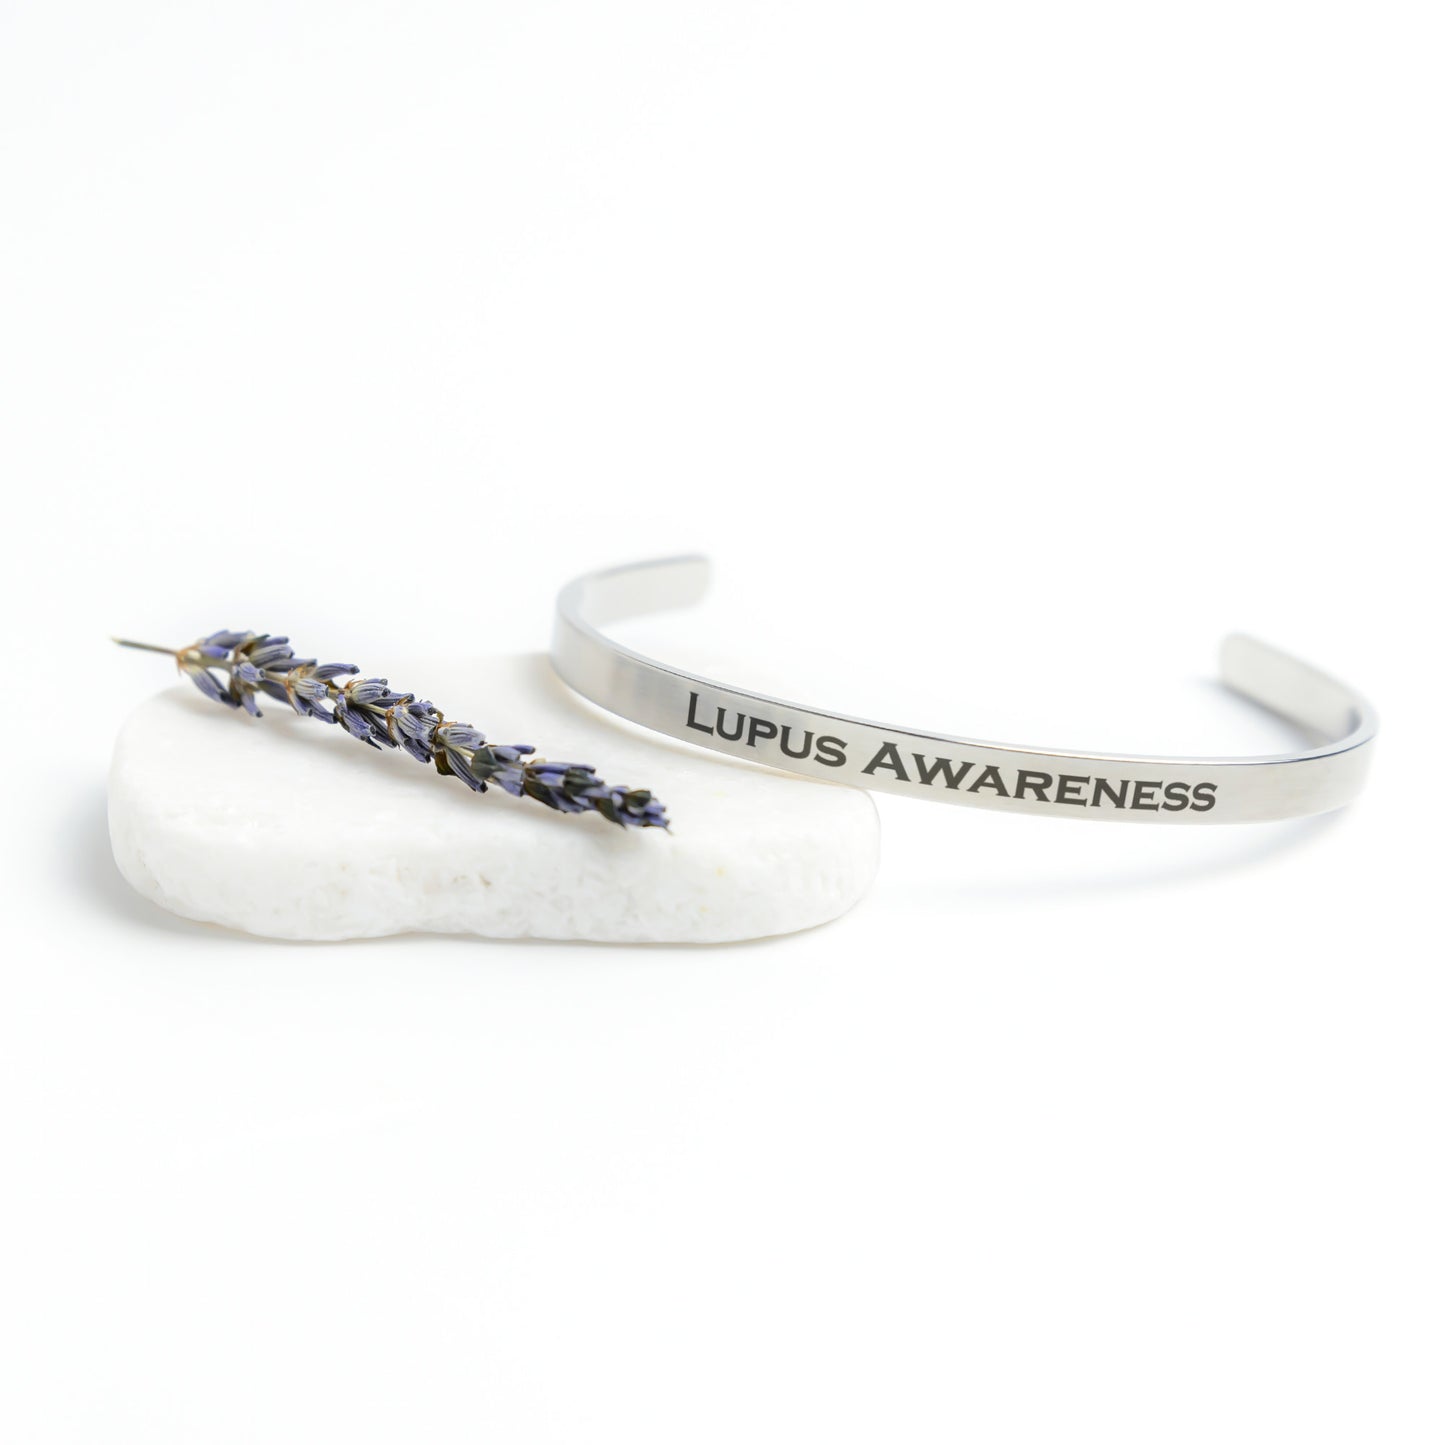 Personalized Lupus Awareness Cuff Bracelet